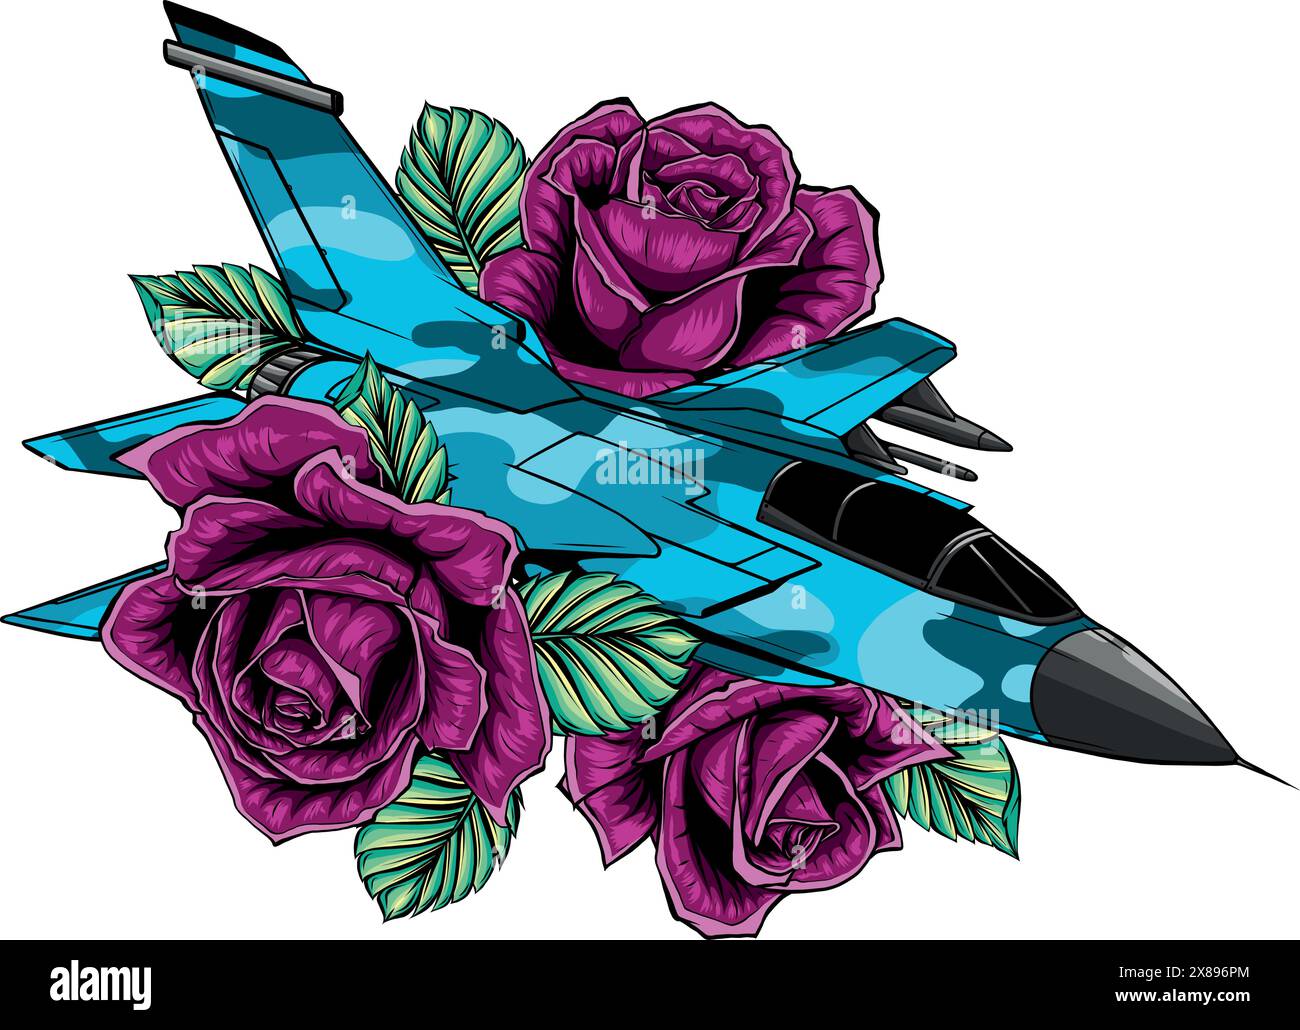 Vector illustration of Cartoon Military Jet Fighter Plane. Stock Vector